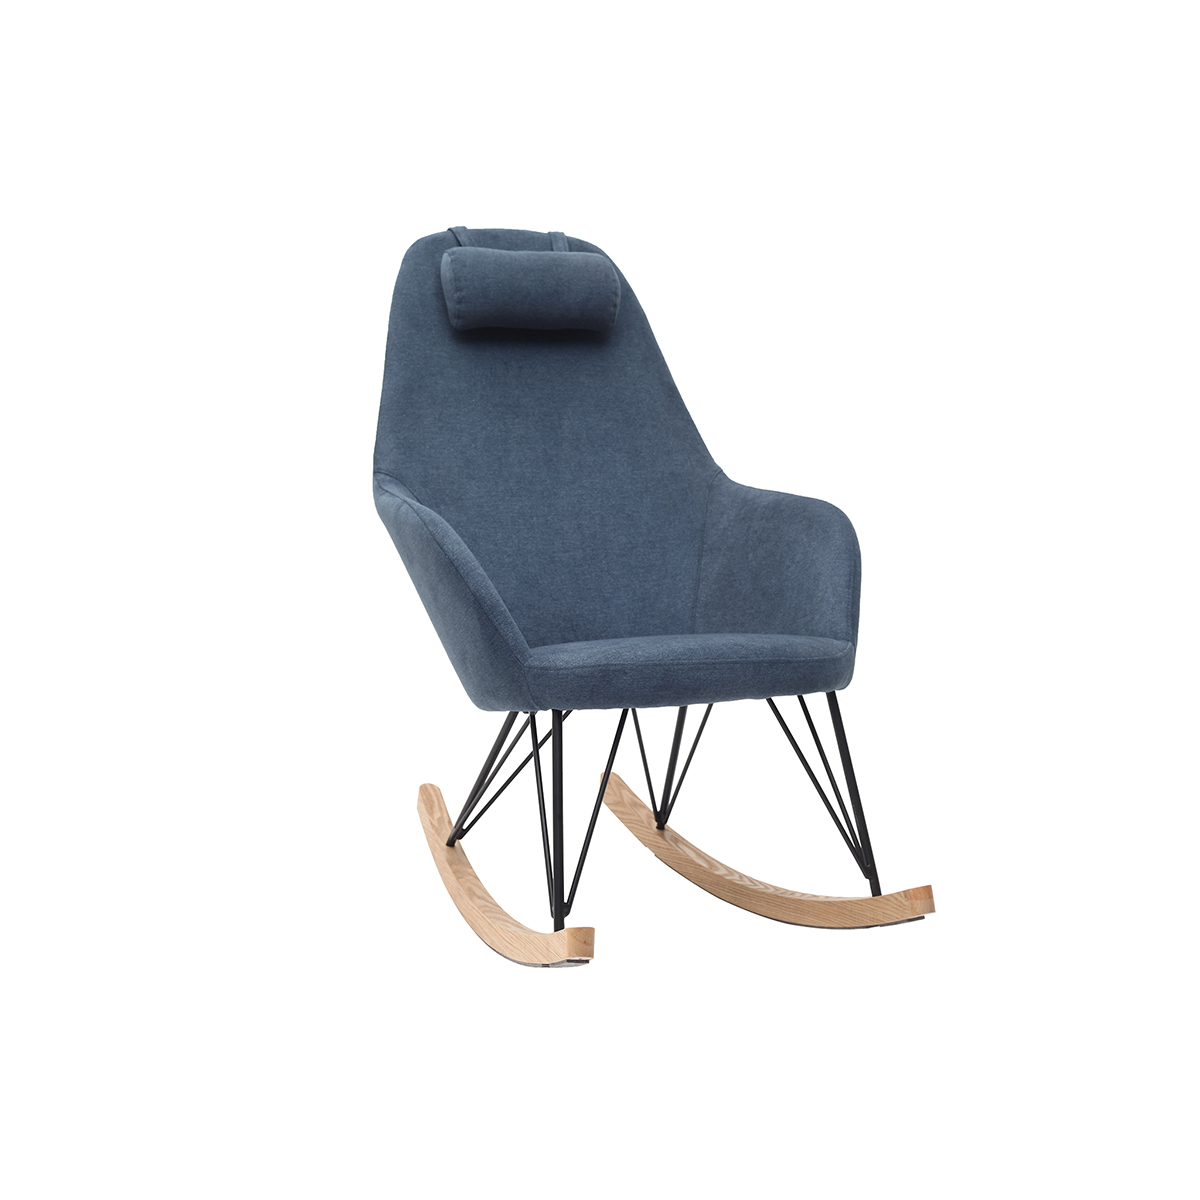 Rocking chair scandinave en tissu effet velours bleu avec pieds métal et bois JHENE vue1